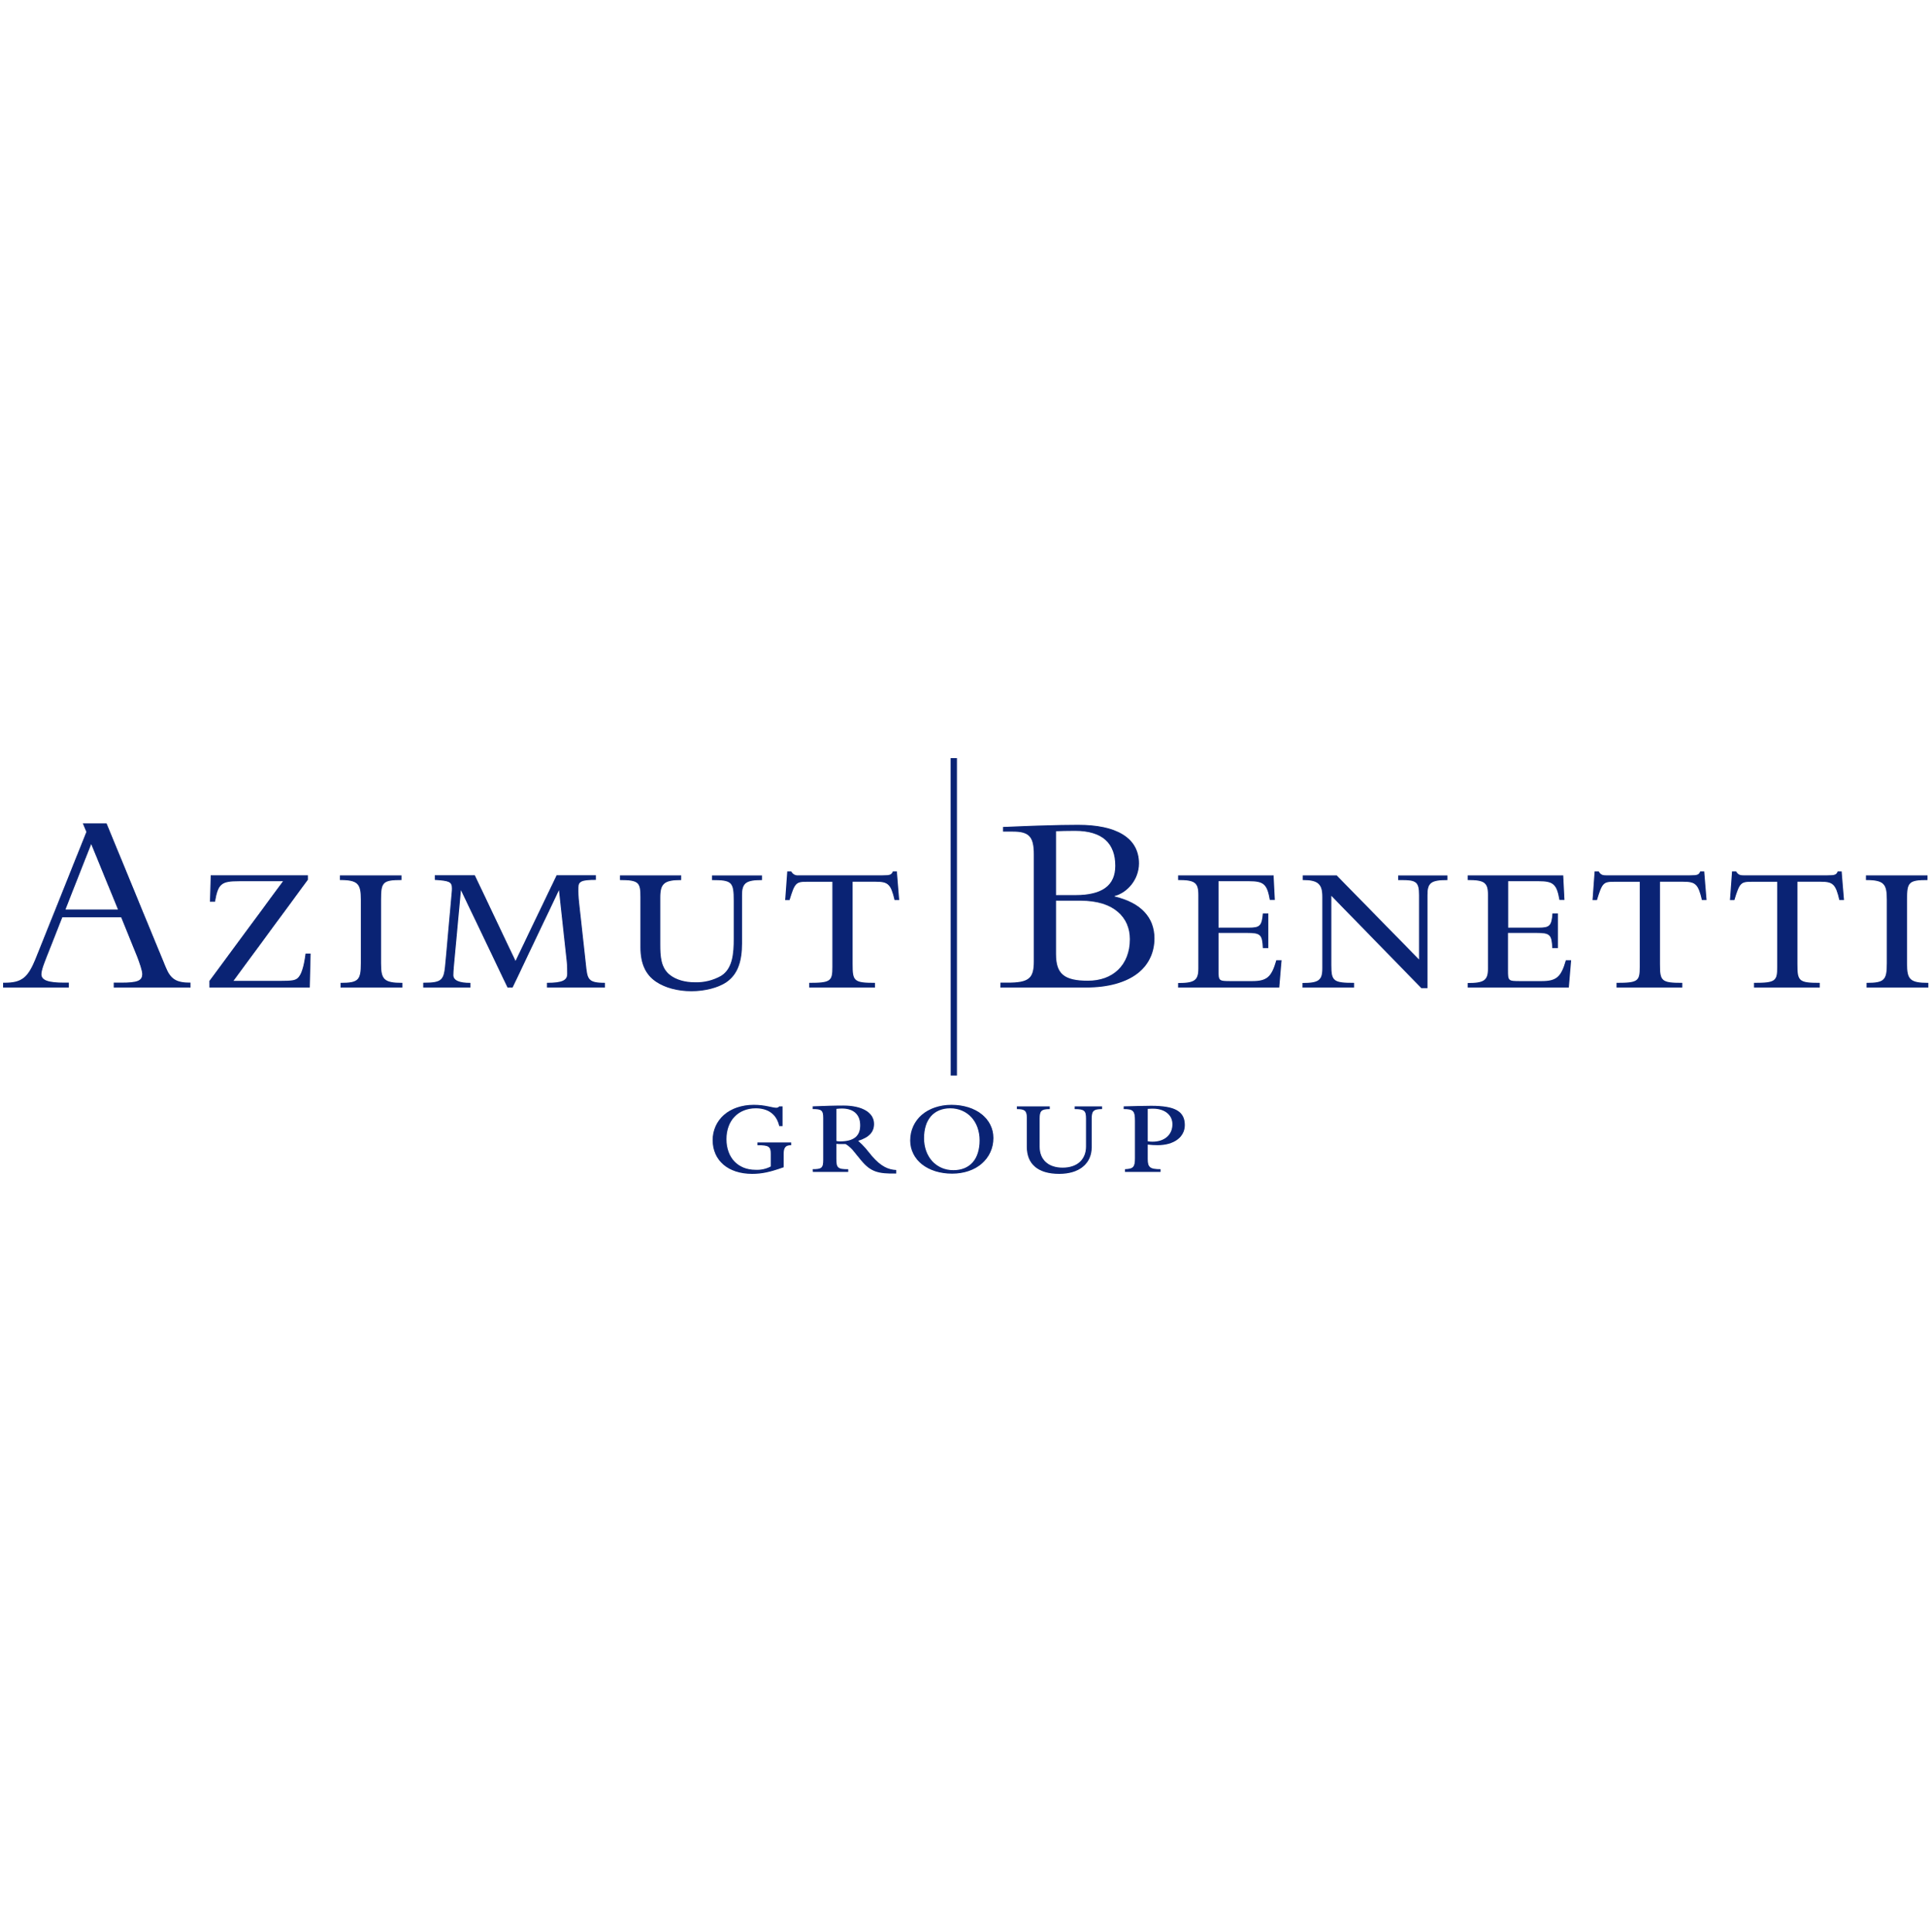 Azimut Benetti Group Logo Transparent Picture